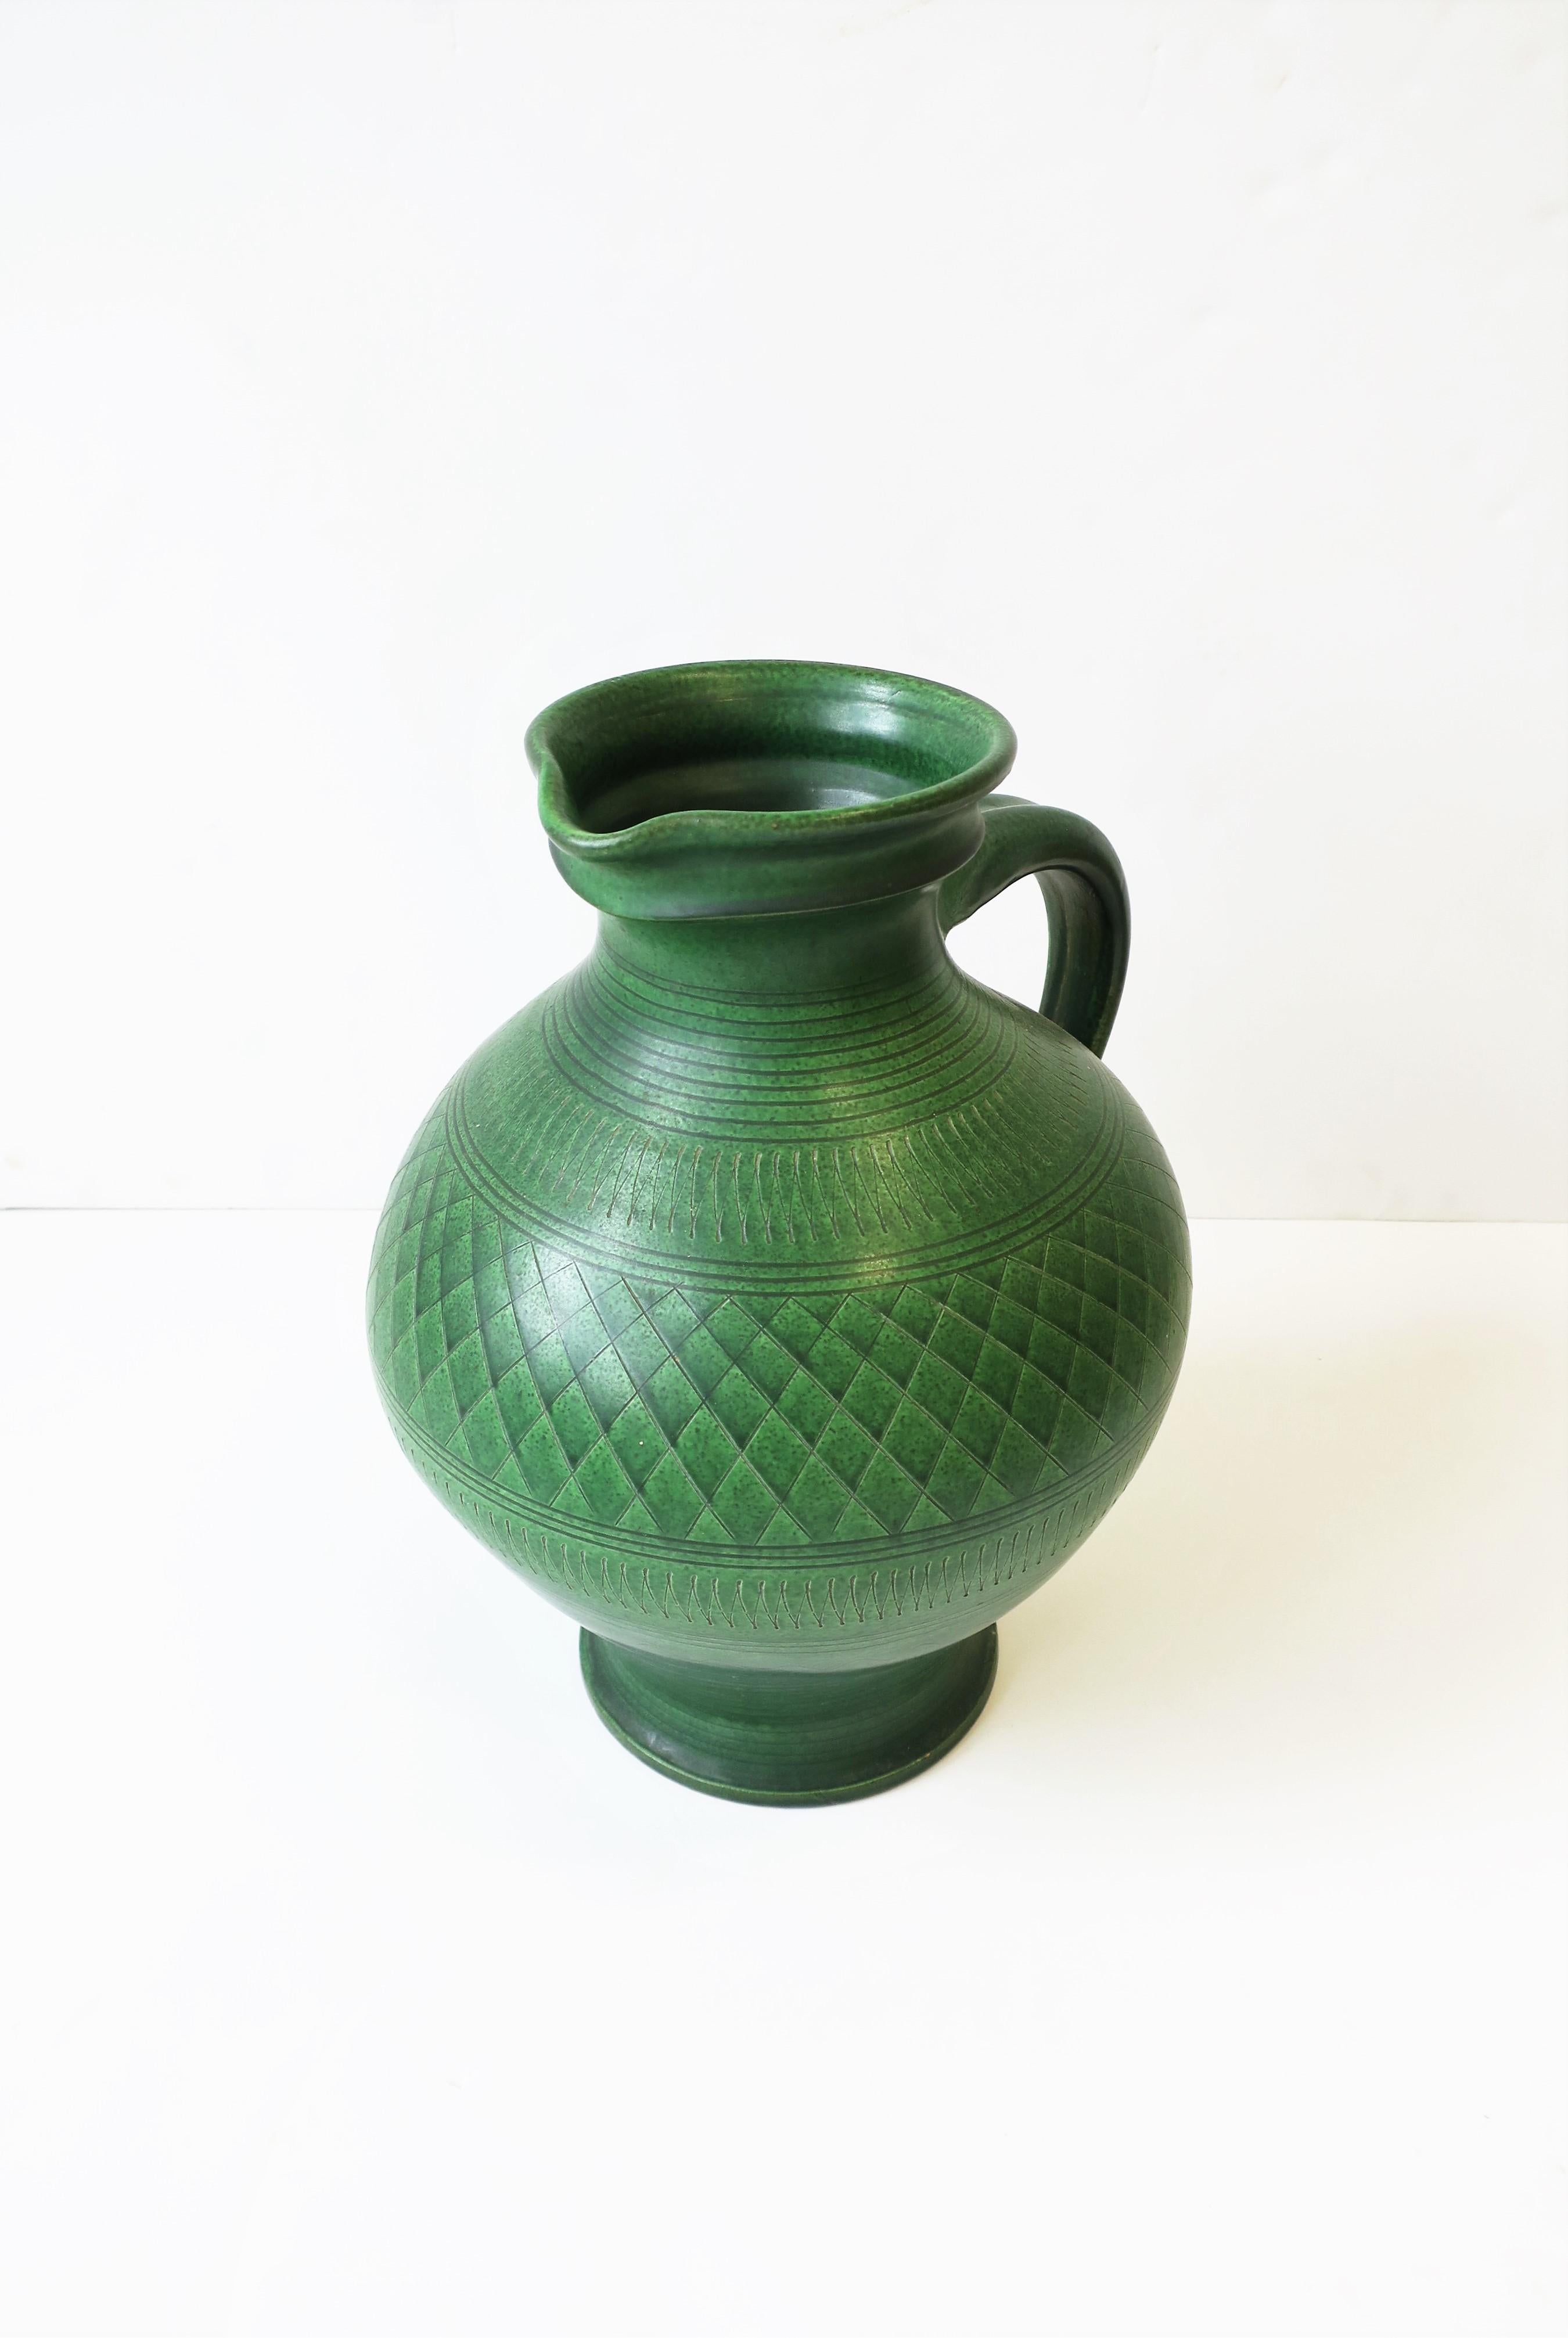 Art Nouveau German Green Pottery Pitcher or Vase